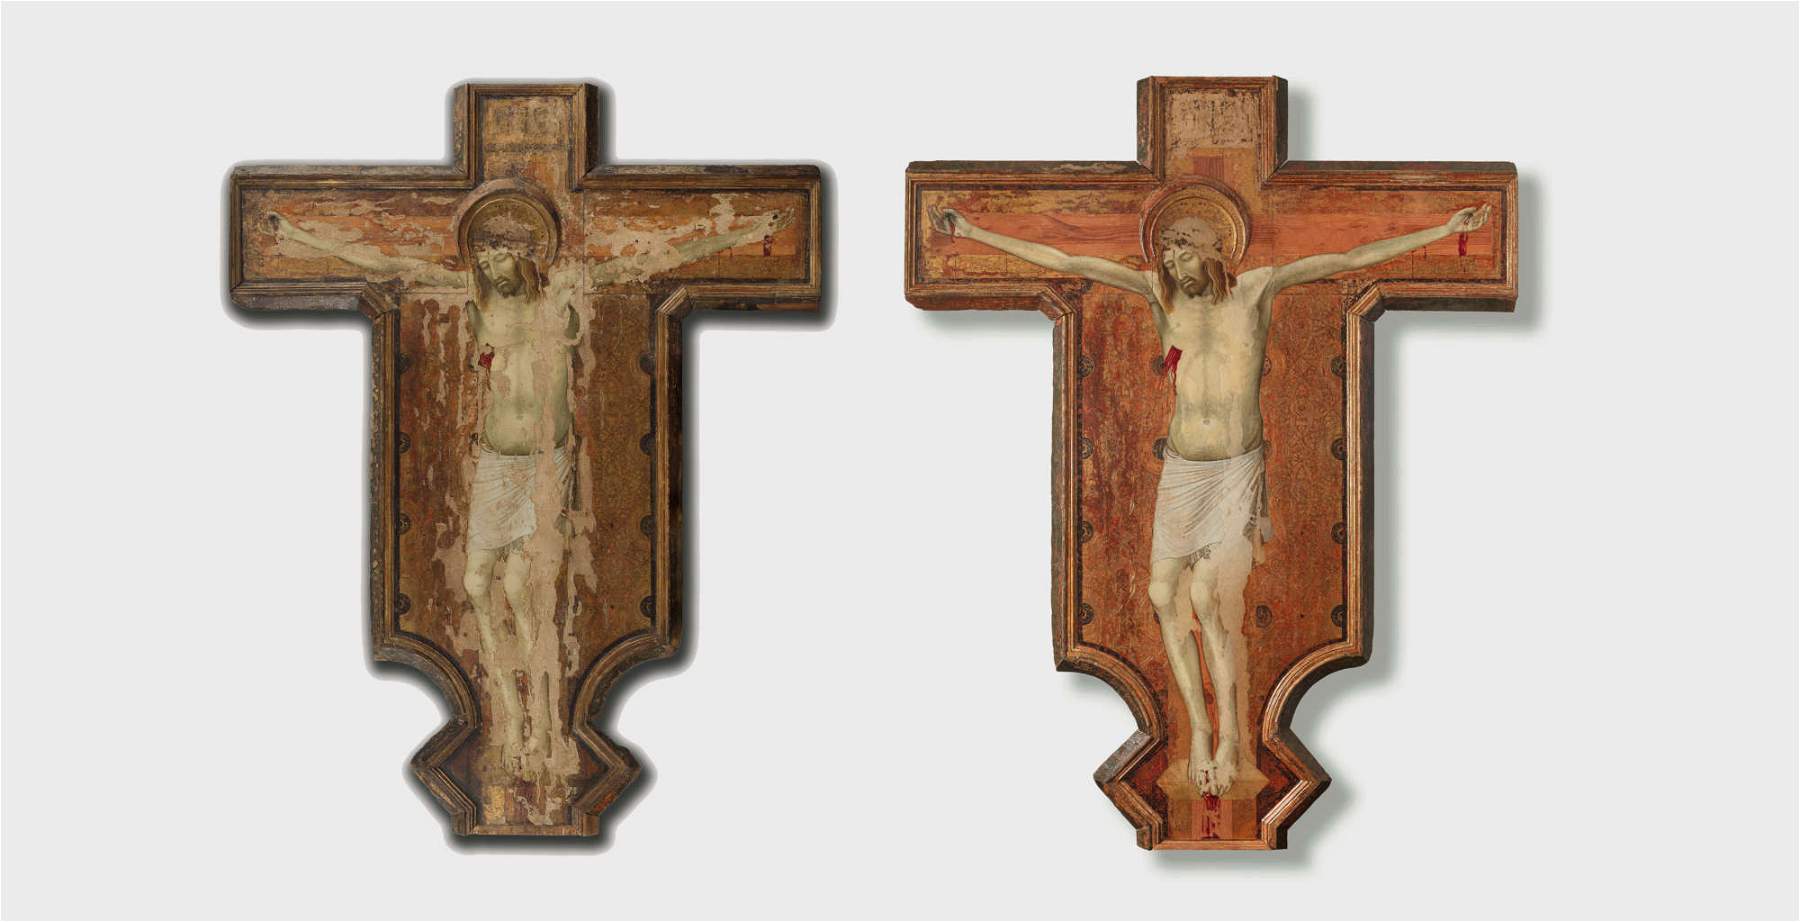 Sienne, fin de la restauration de la Croix du Carmin d'Ambrogio Lorenzetti